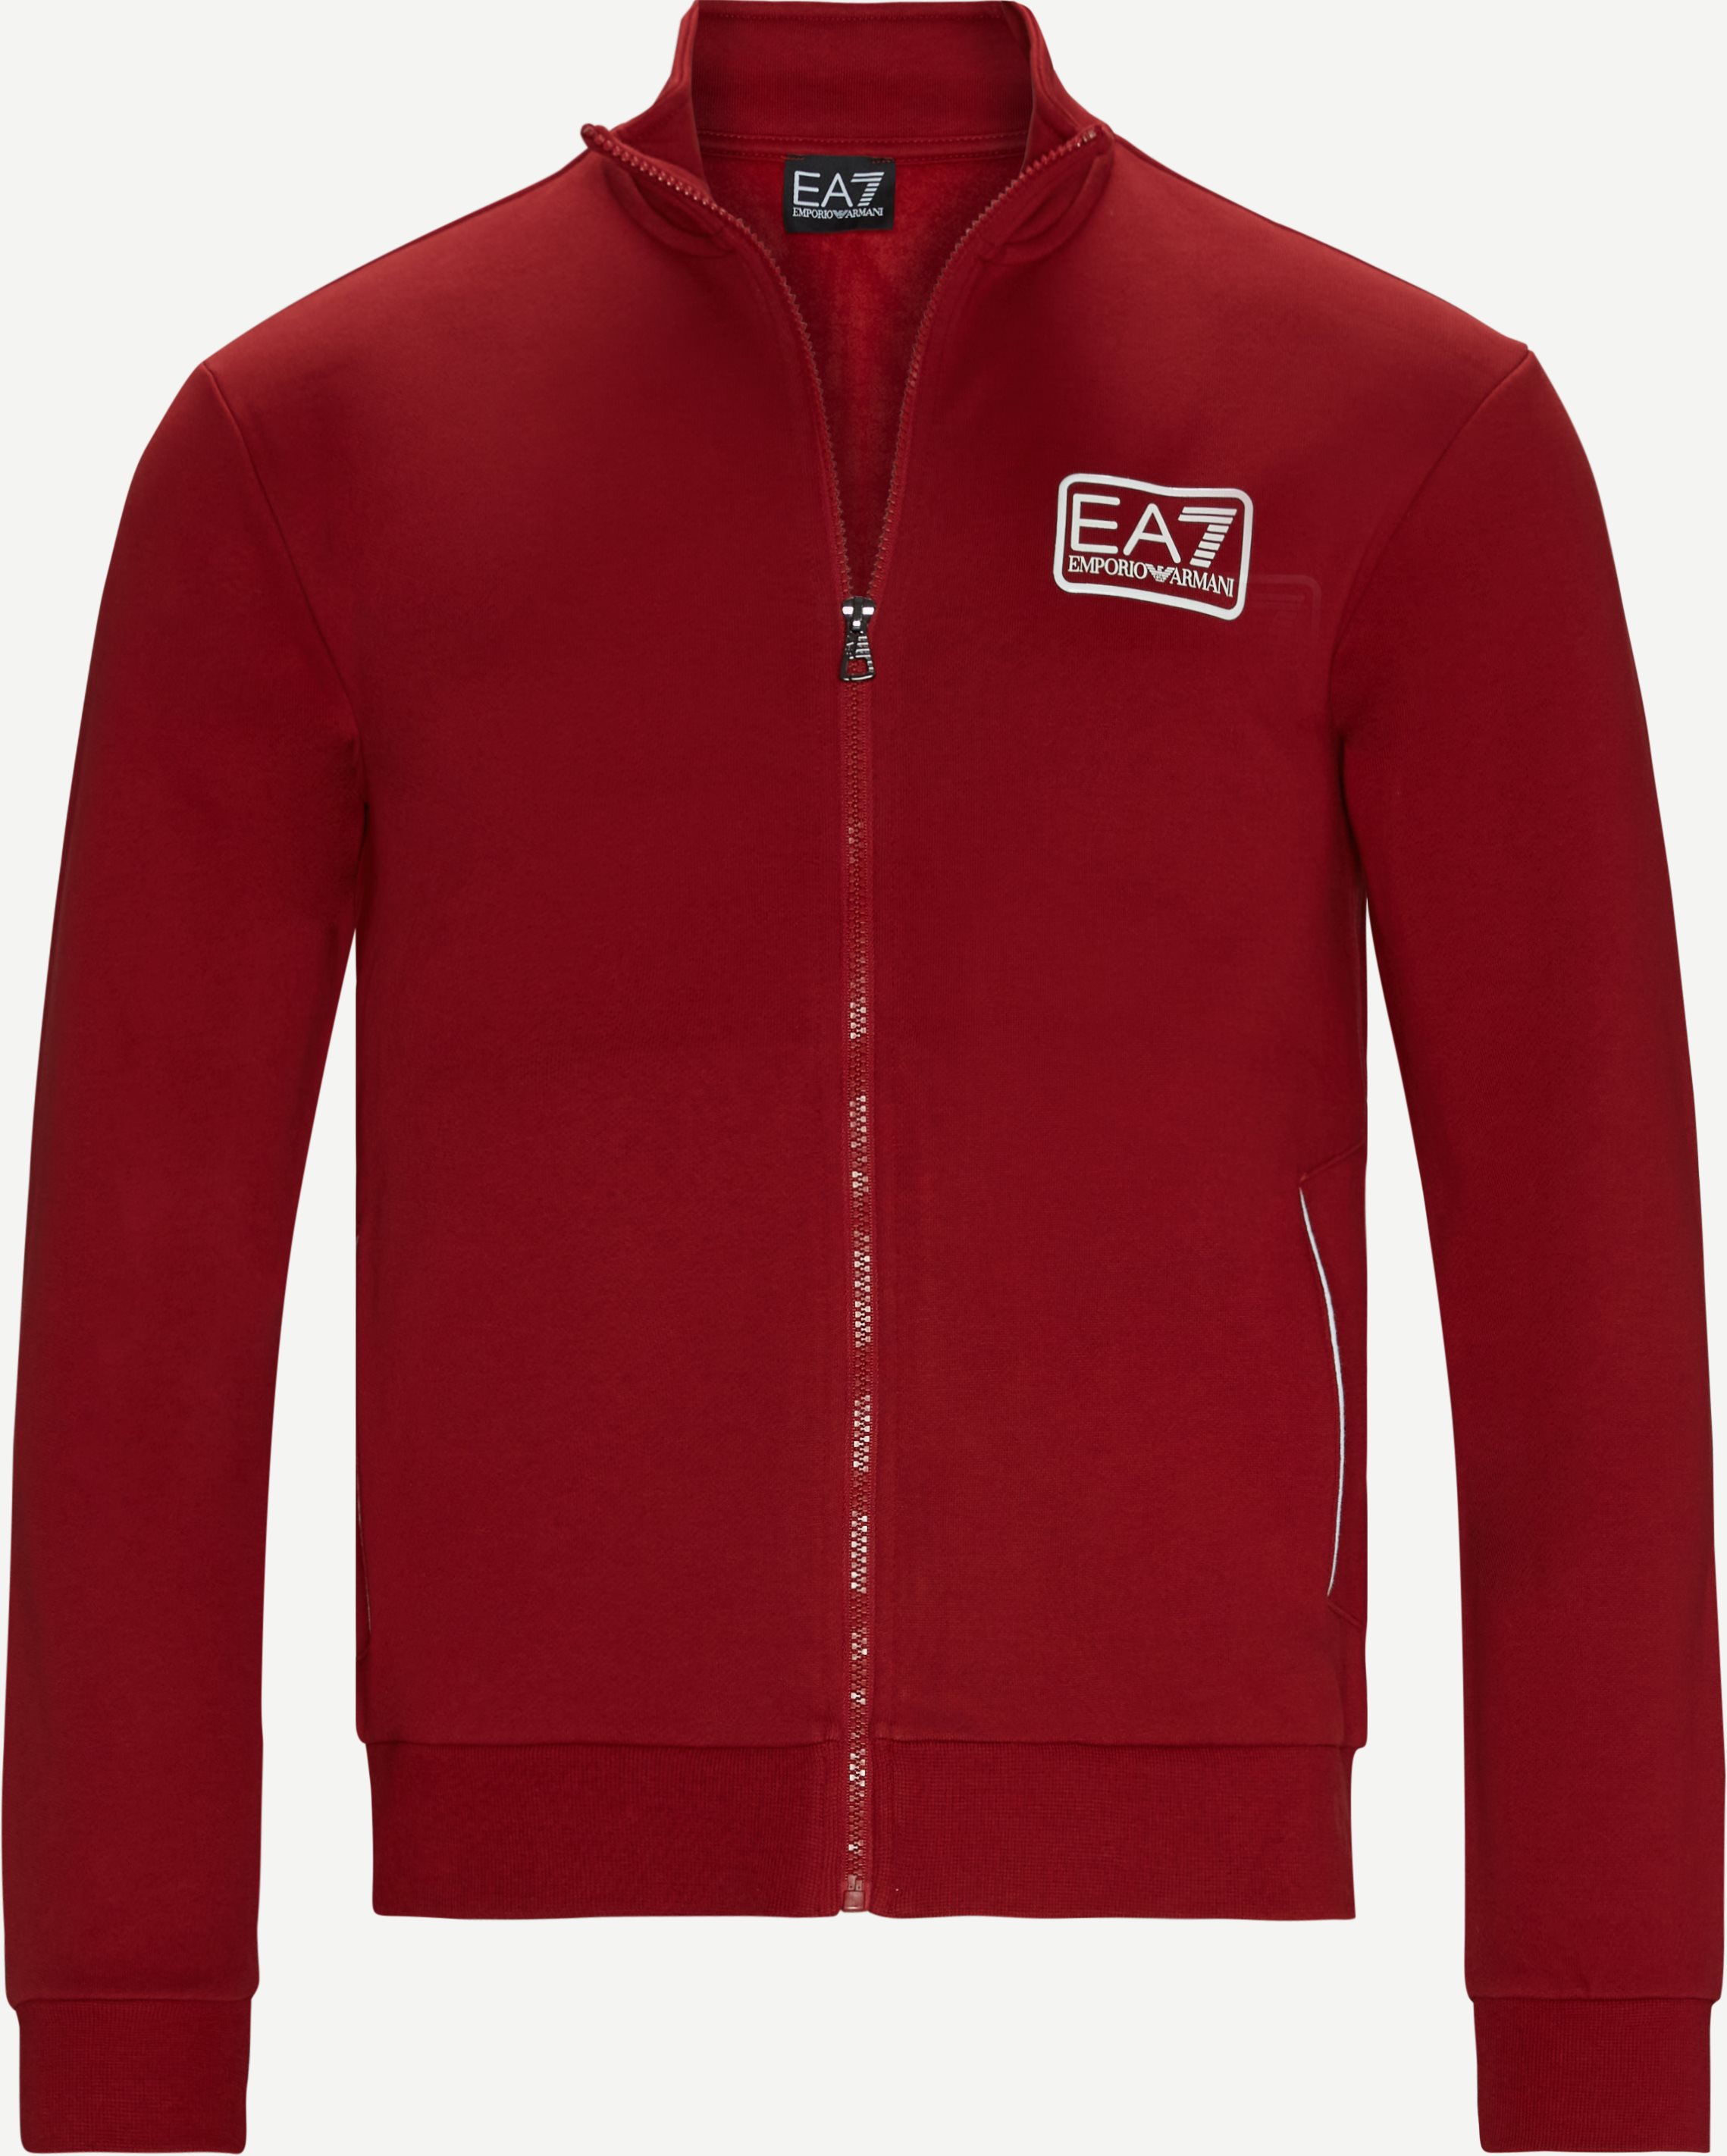 6KPV67 Sweatshirt - Sweatshirts - Regular fit - Red